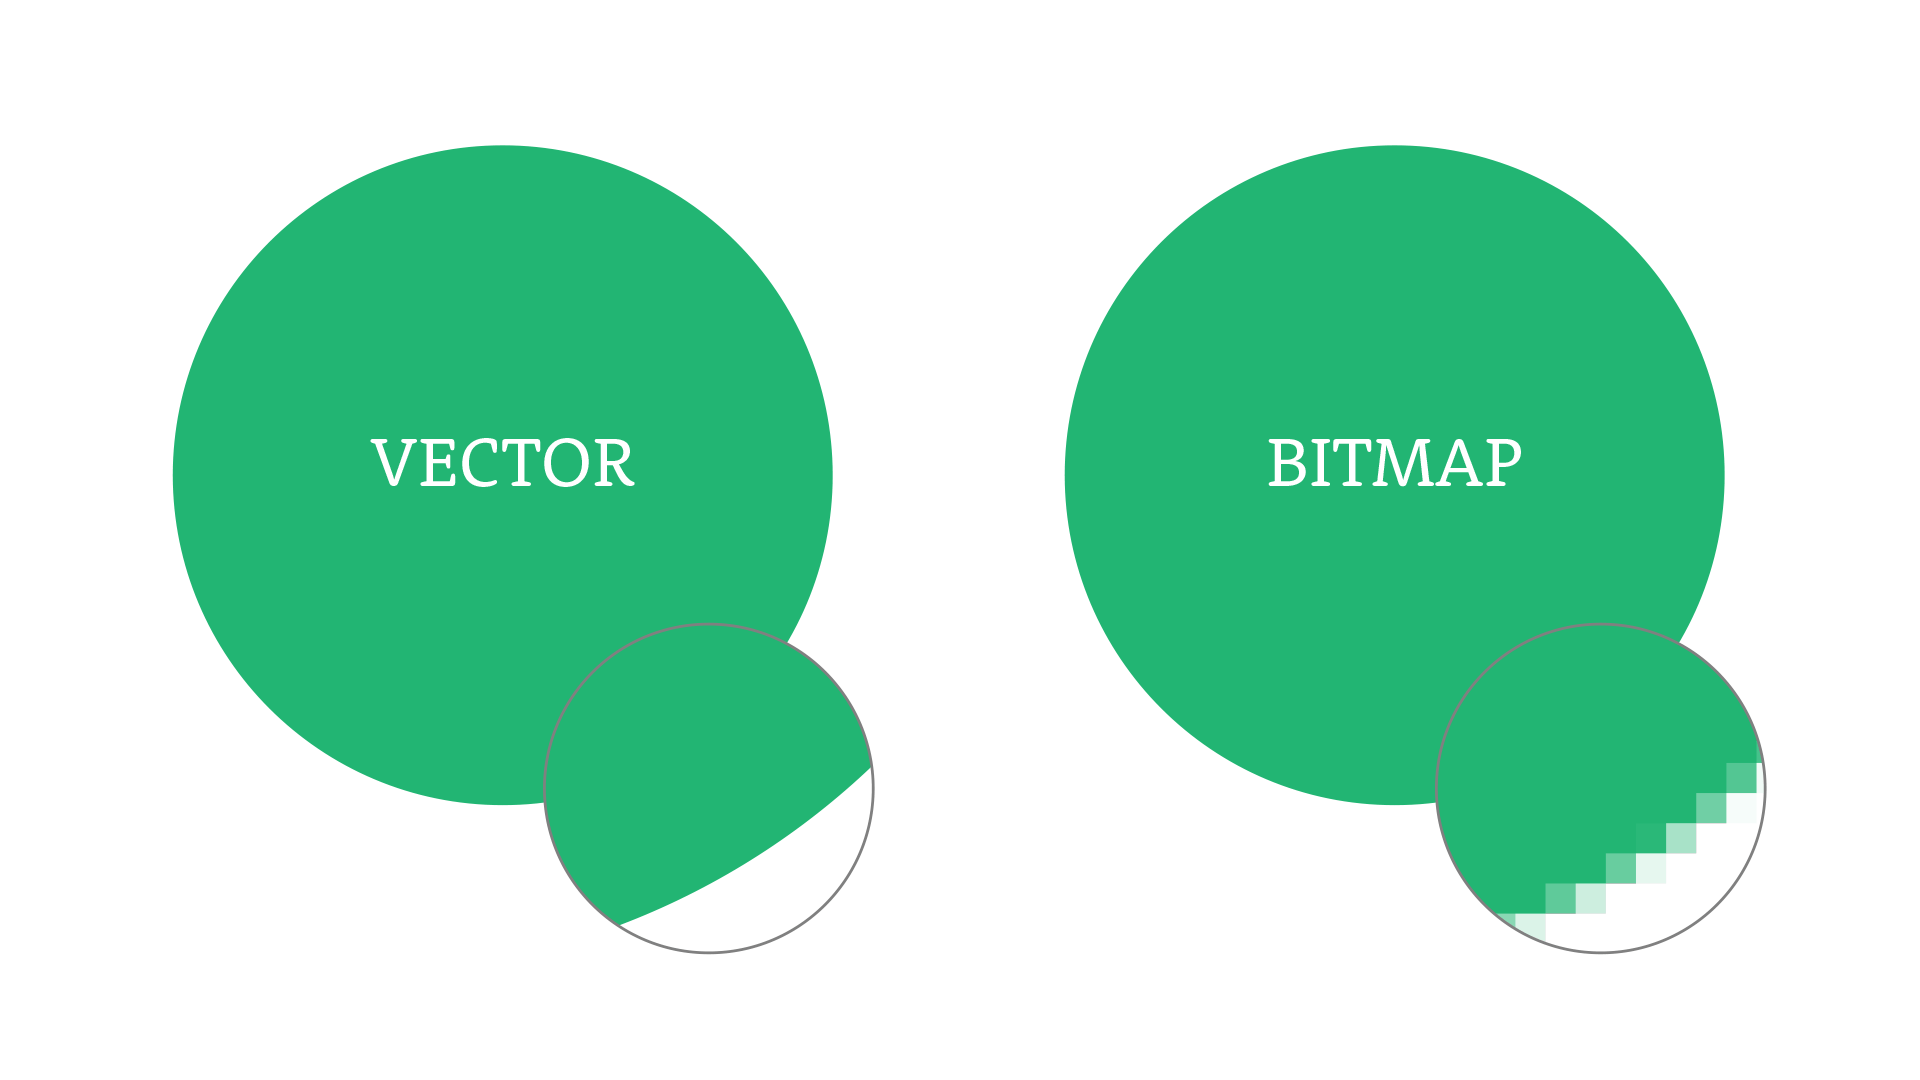 bitmap graphics examples